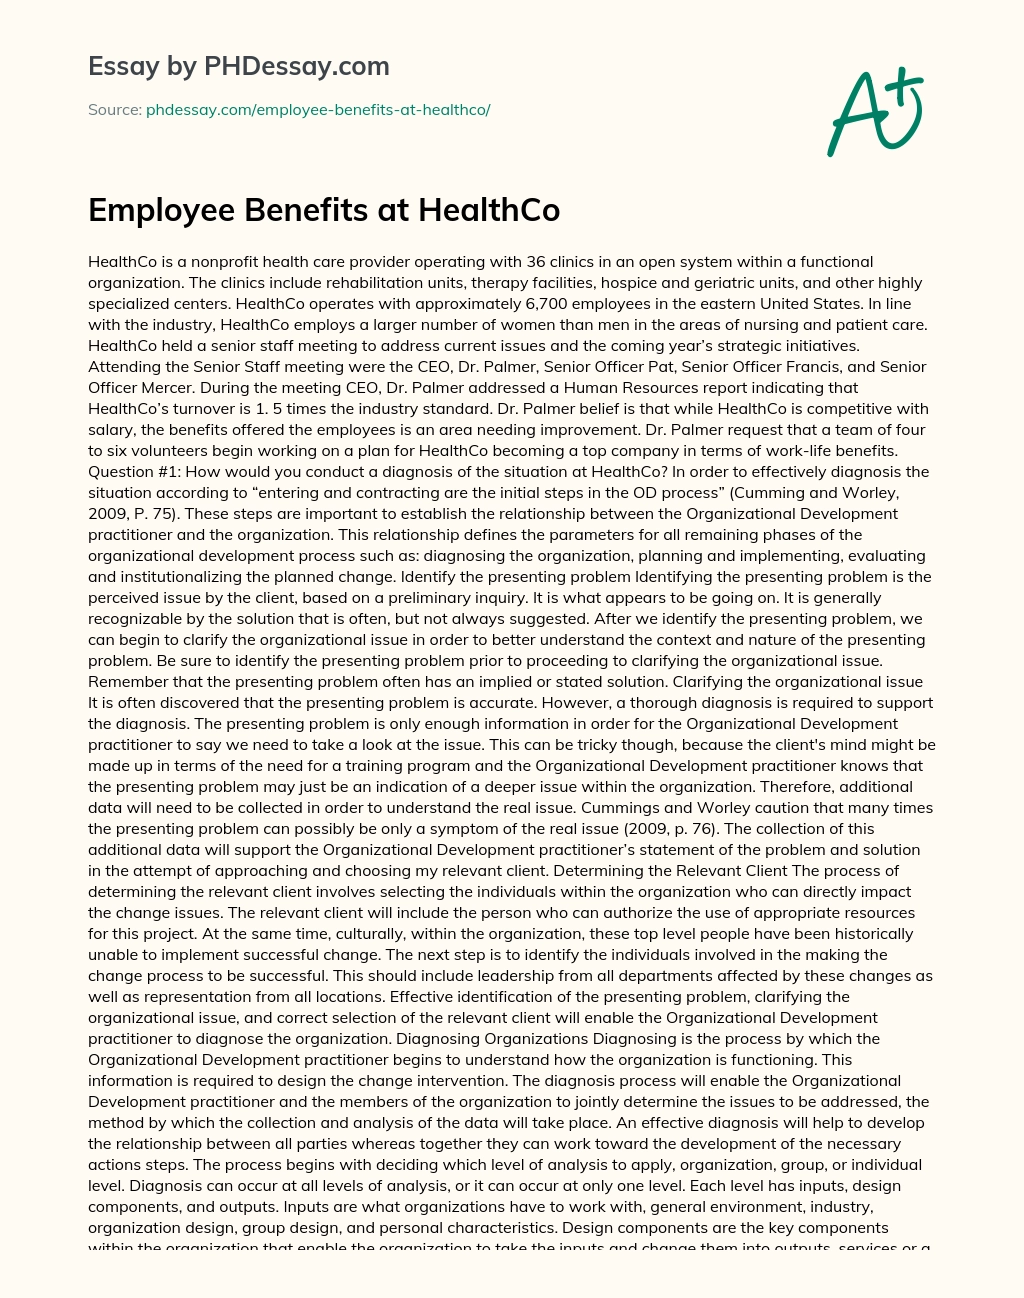 Employee Benefits at HealthCo essay